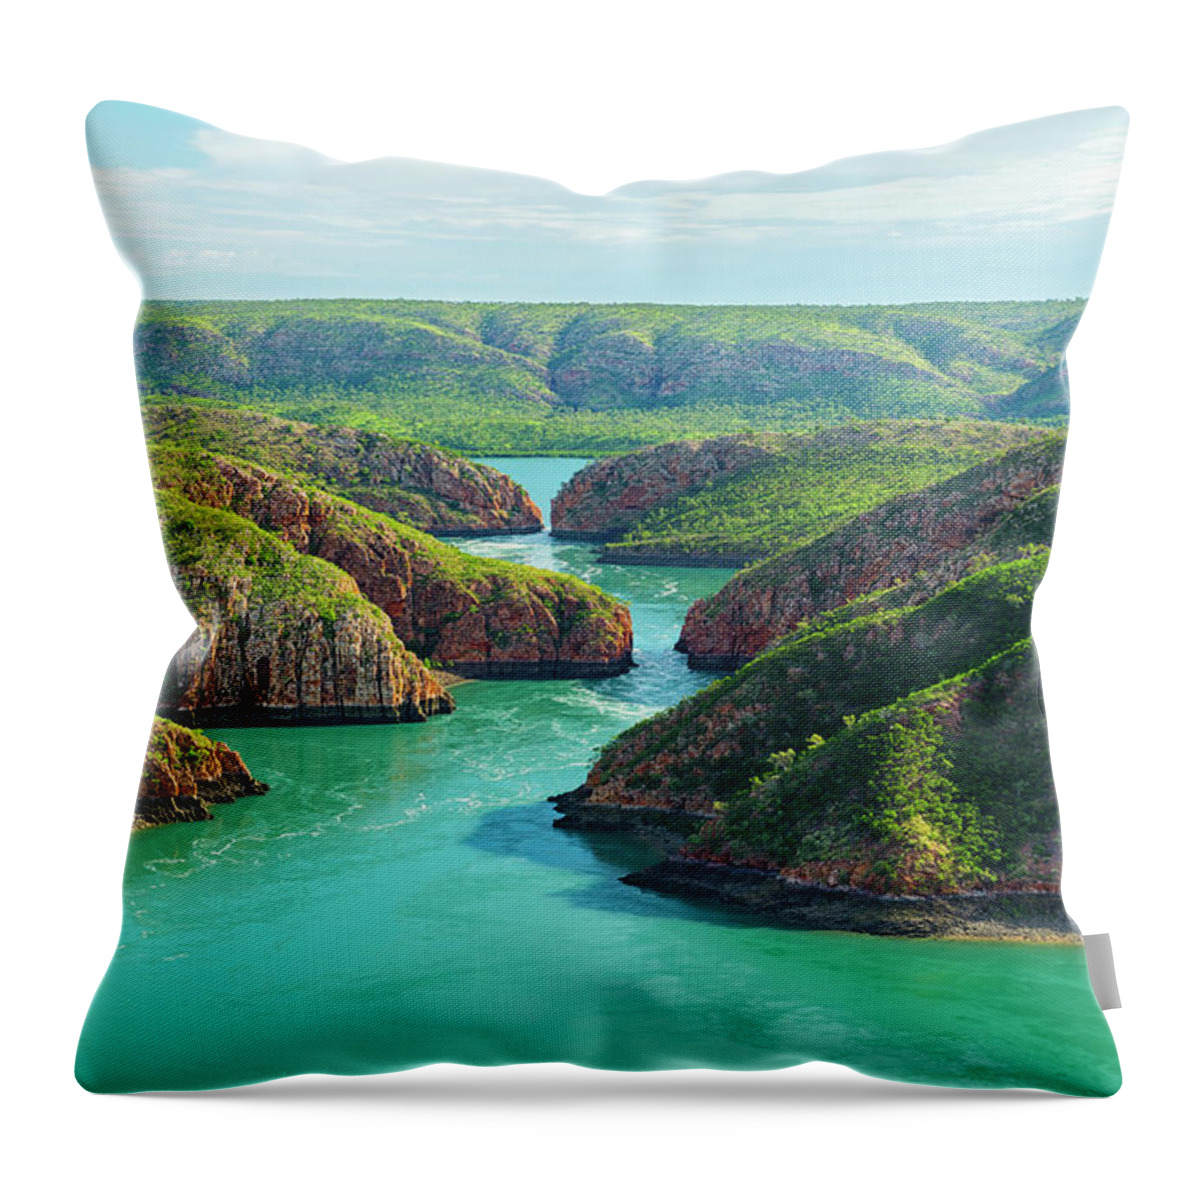 Scenics Throw Pillow featuring the photograph Horizontal Falls, Kimberley, Australia by Laurenepbath